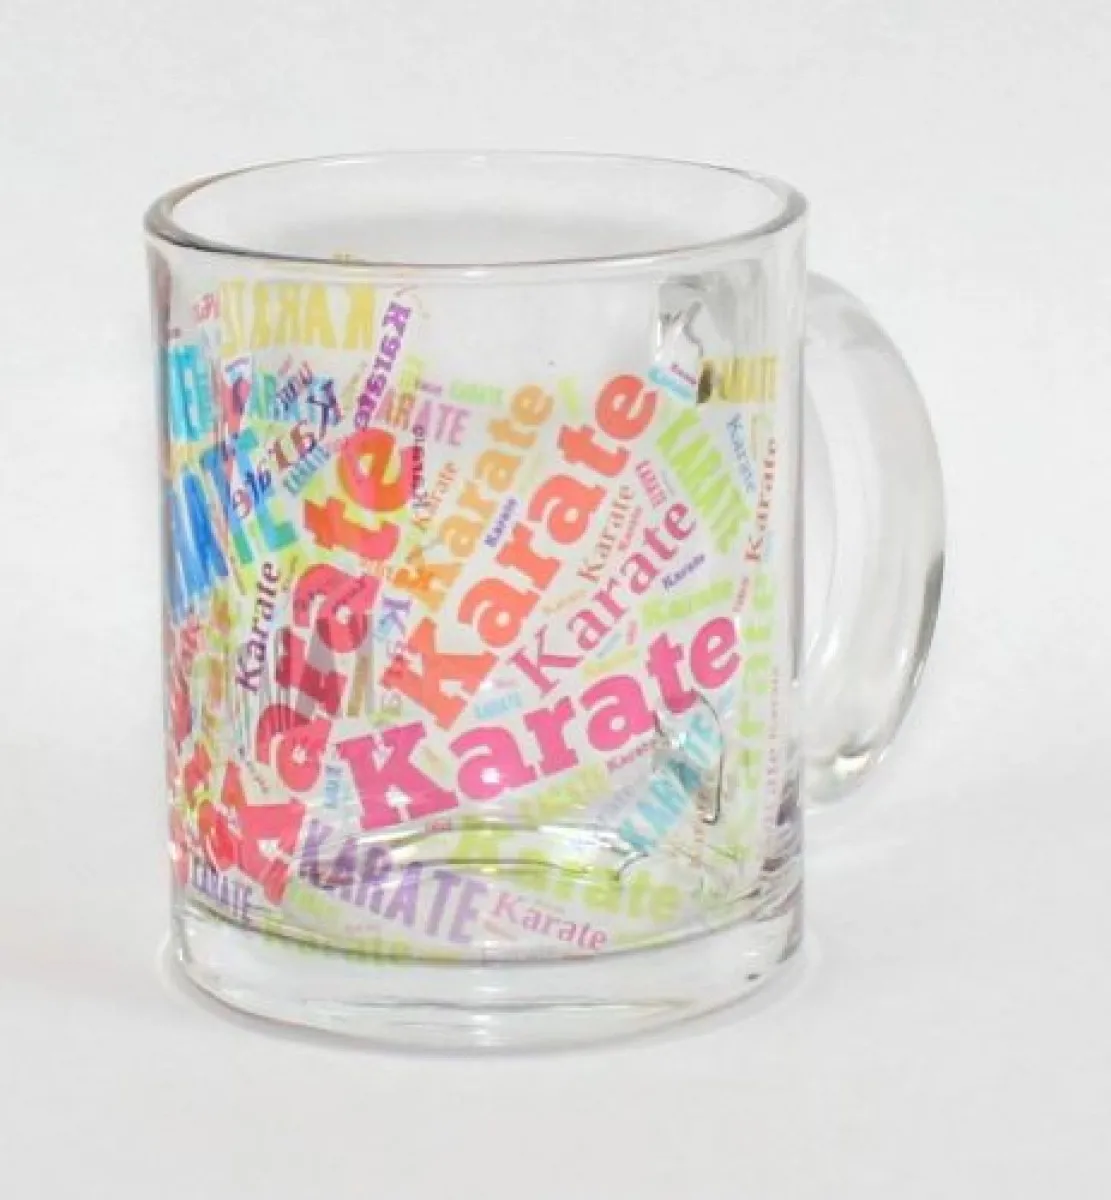 Mug en verre avec motif Karate Texte